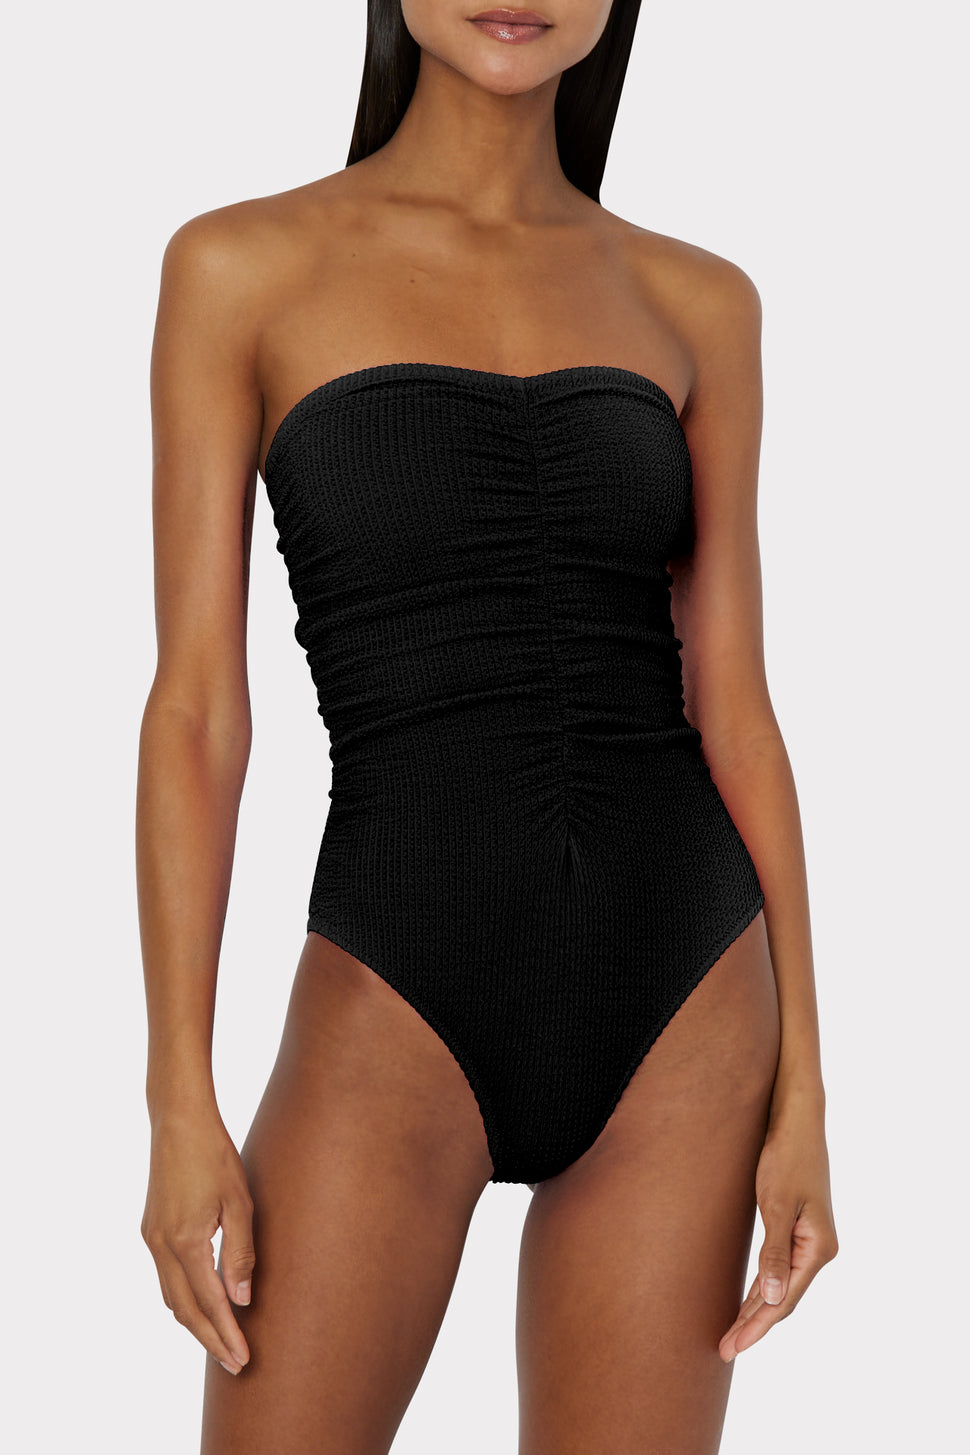 Women's Strapless Black One Piece Swimsuit